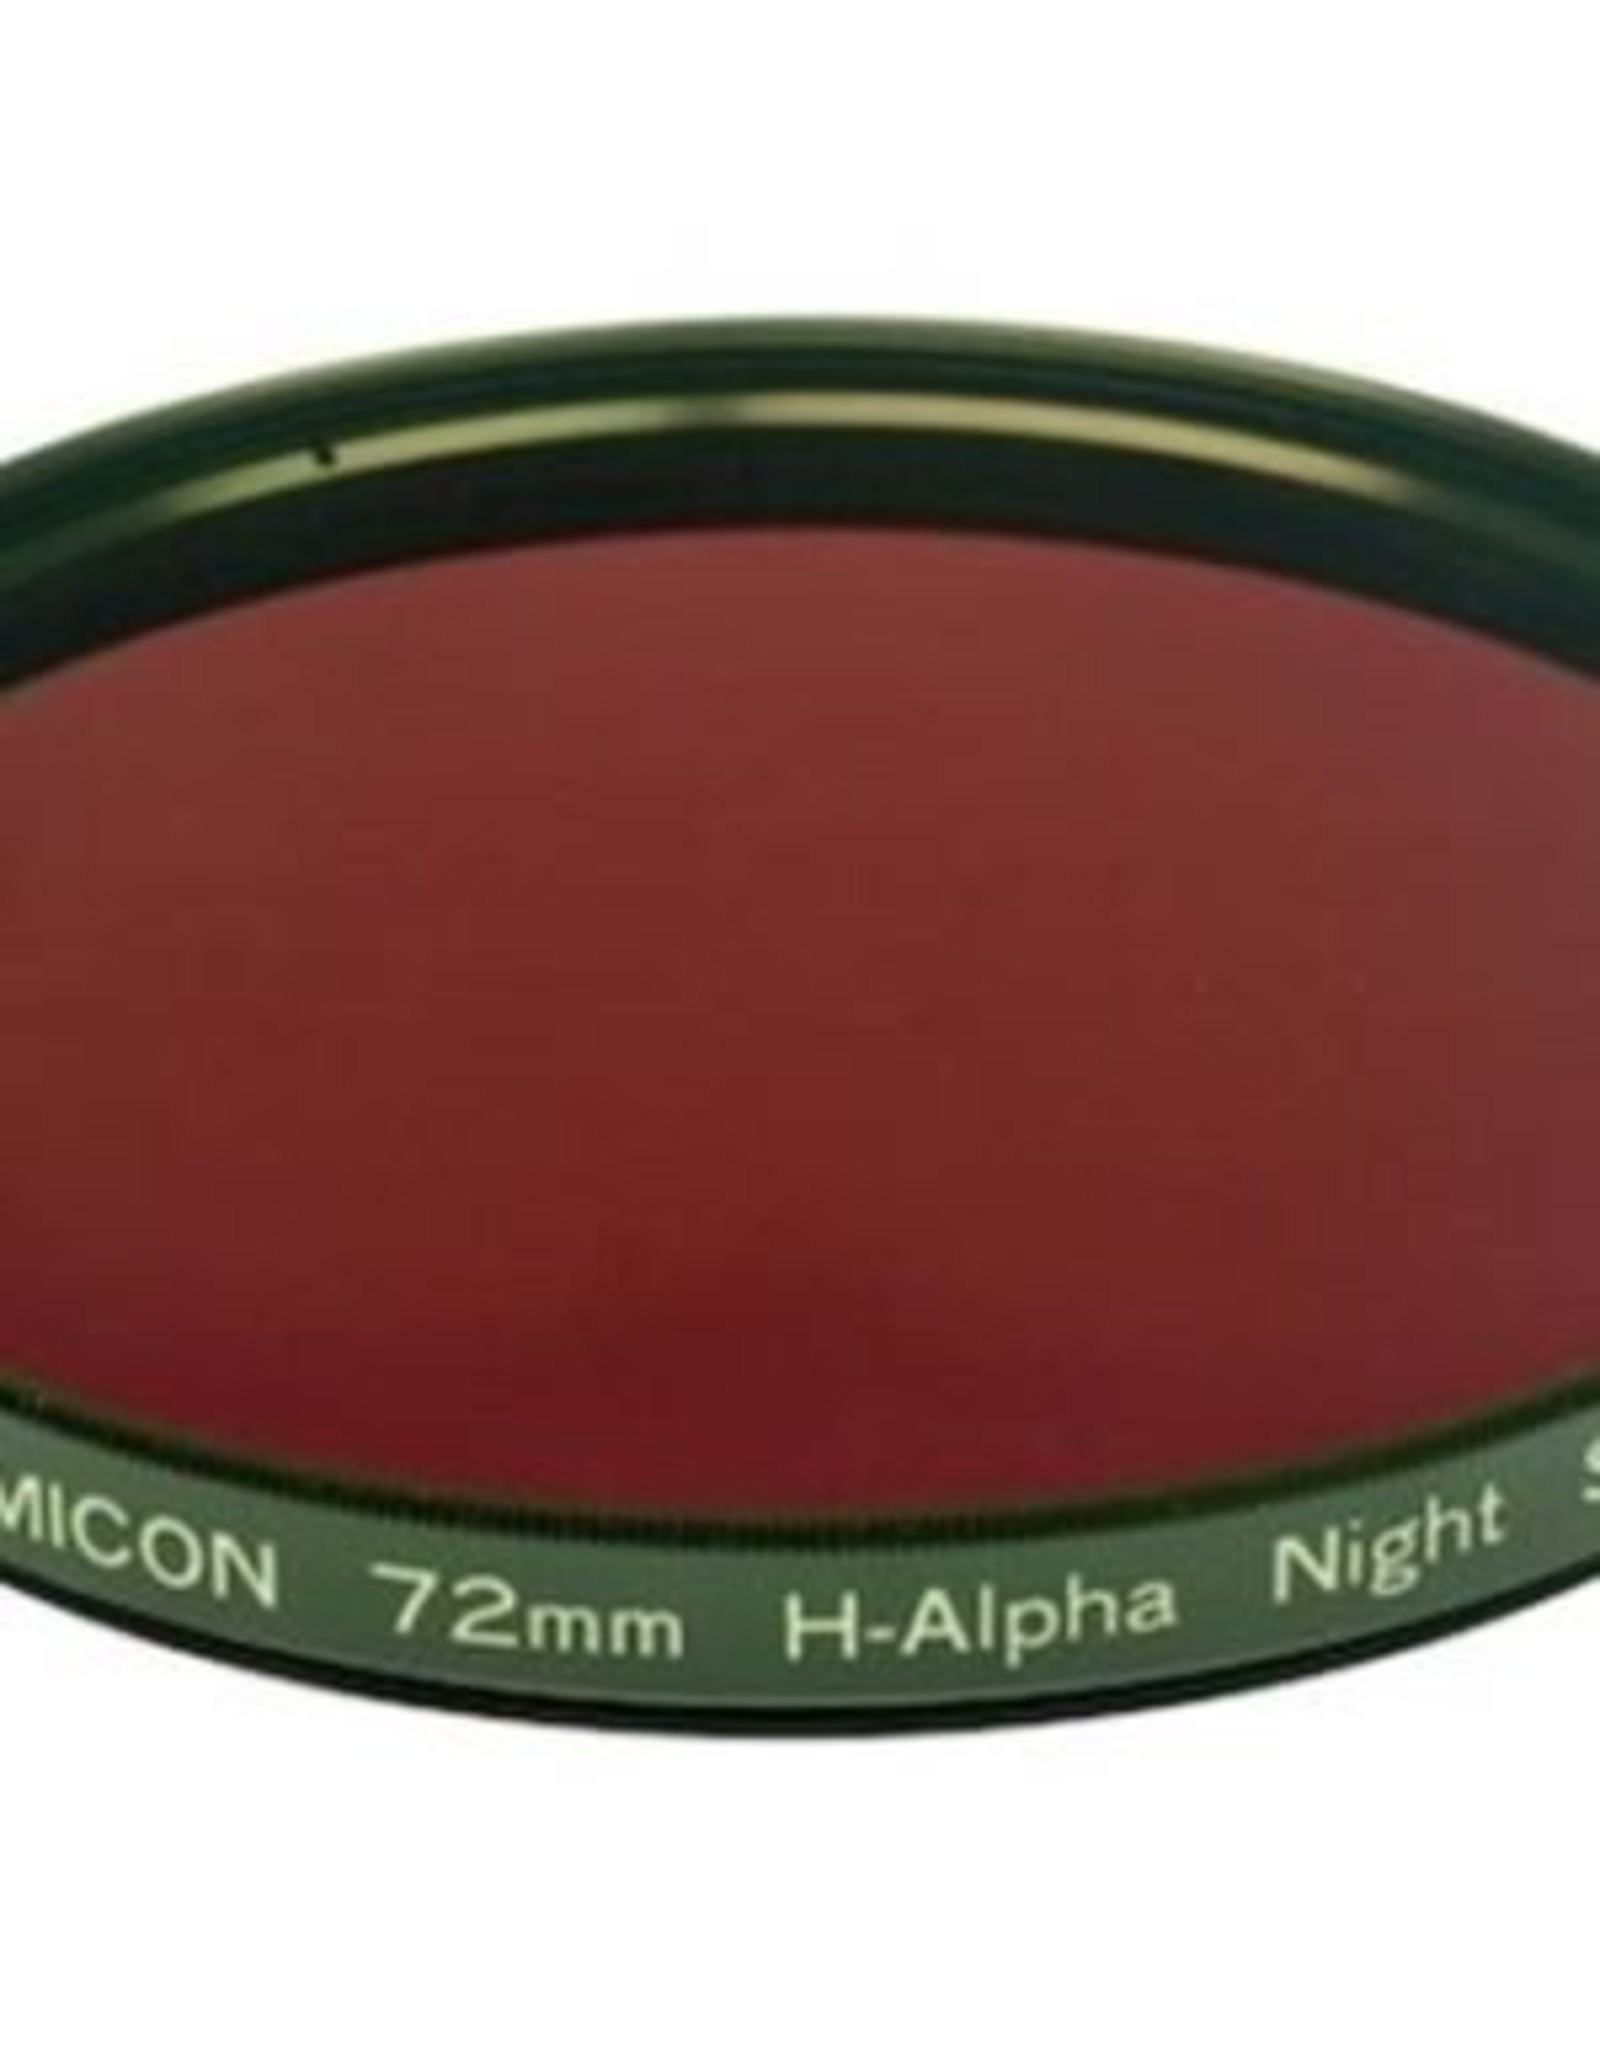 Lumicon Lumicon 72mm Night Sky Hydrogen-Alpha Filter